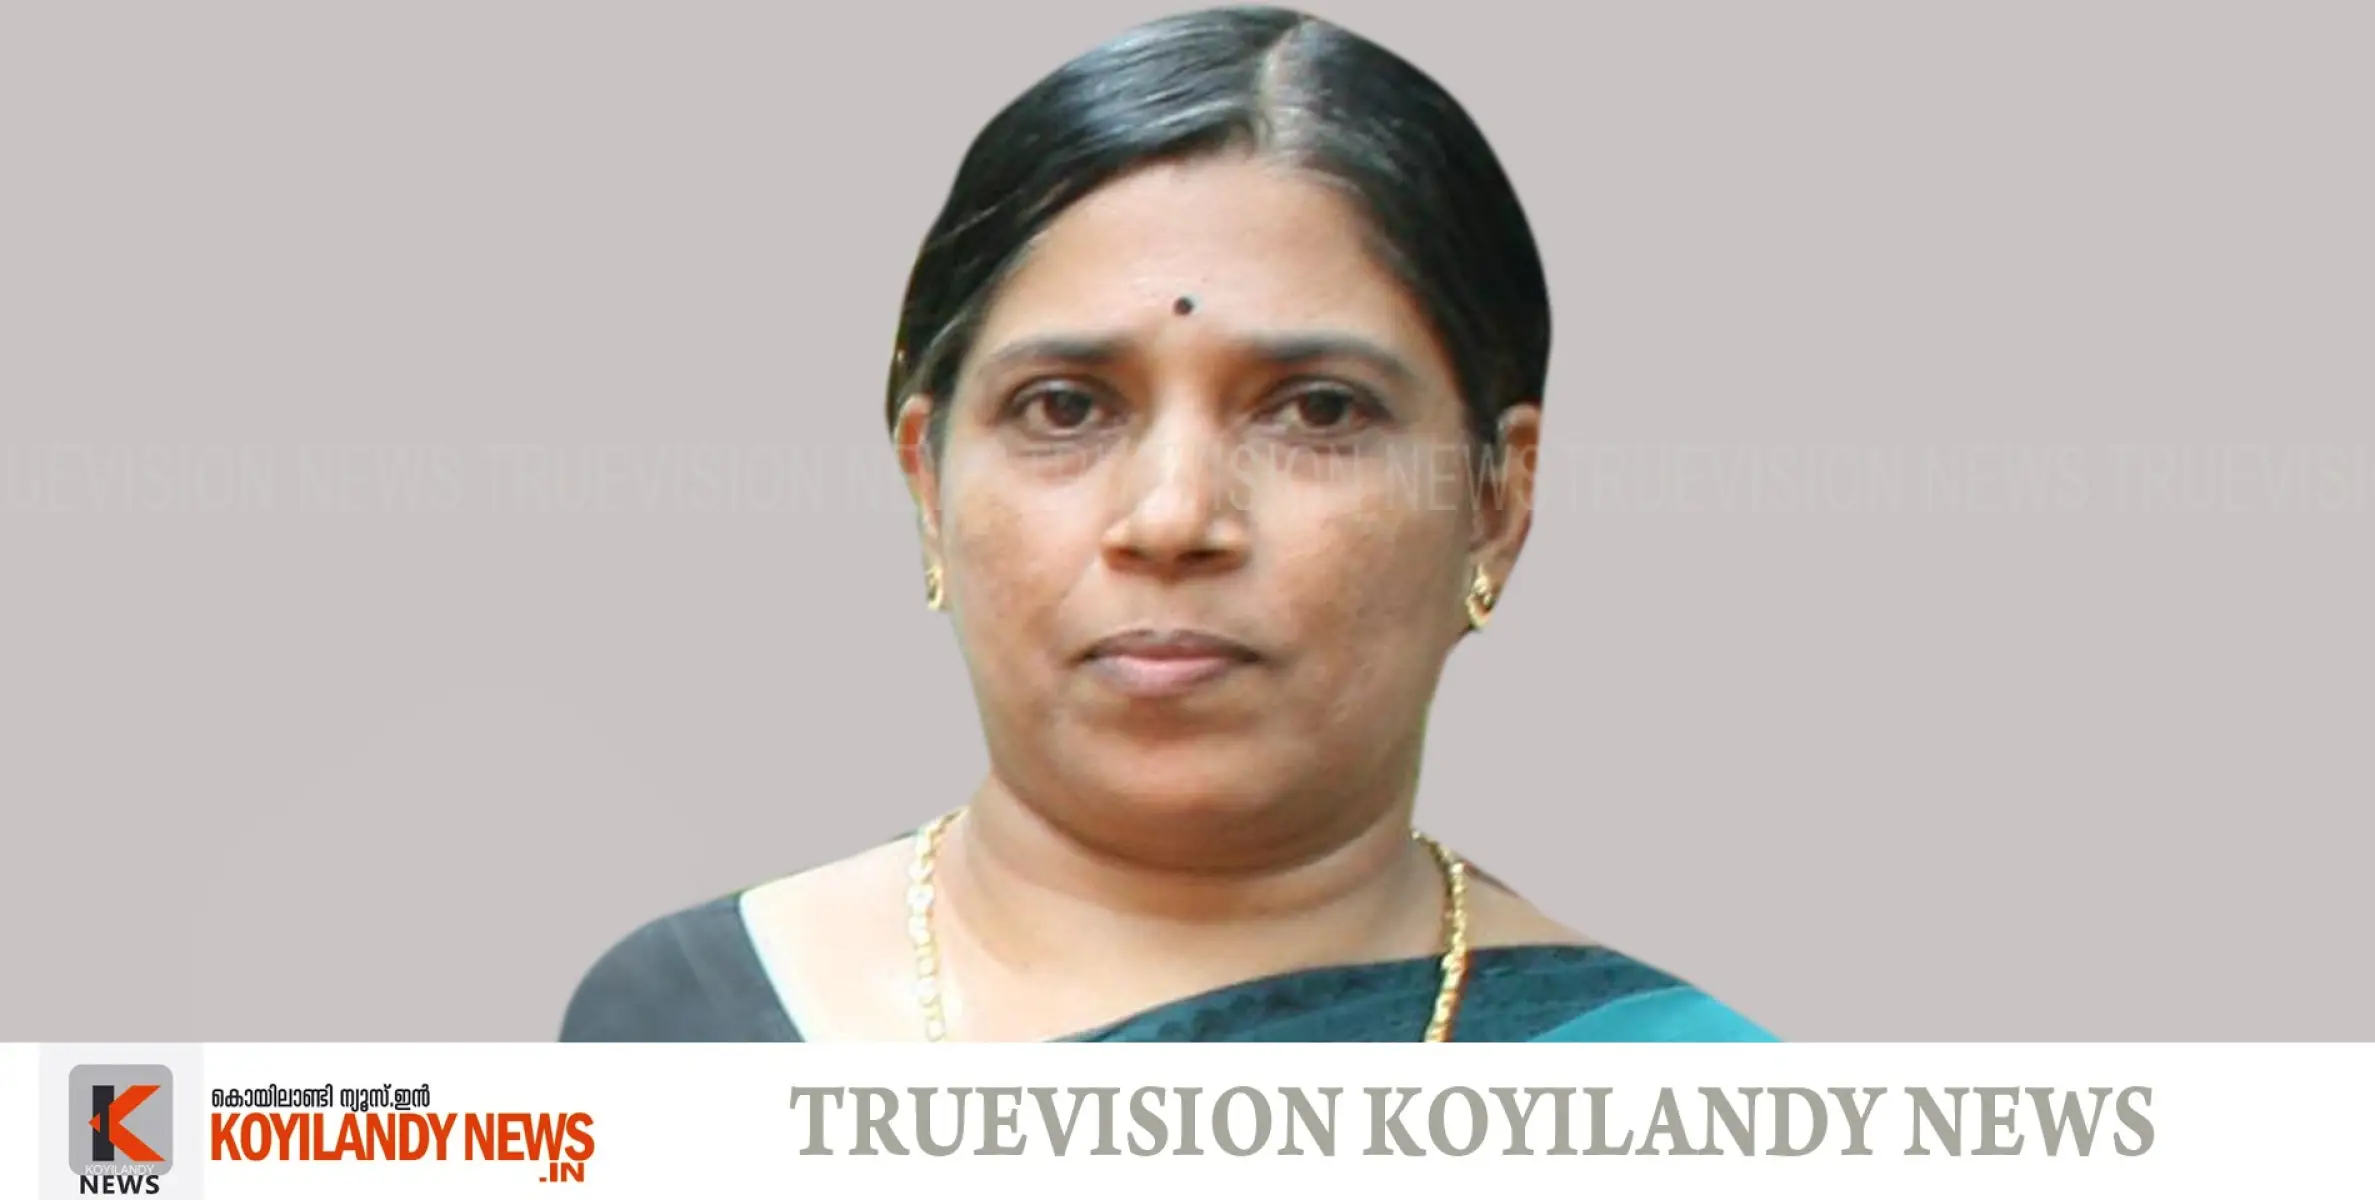 #obituary | ചേമഞ്ചേരി തുവ്വക്കോട് ശ്രുതിലയത്തില്‍ സരോജിനി അന്തരിച്ചു